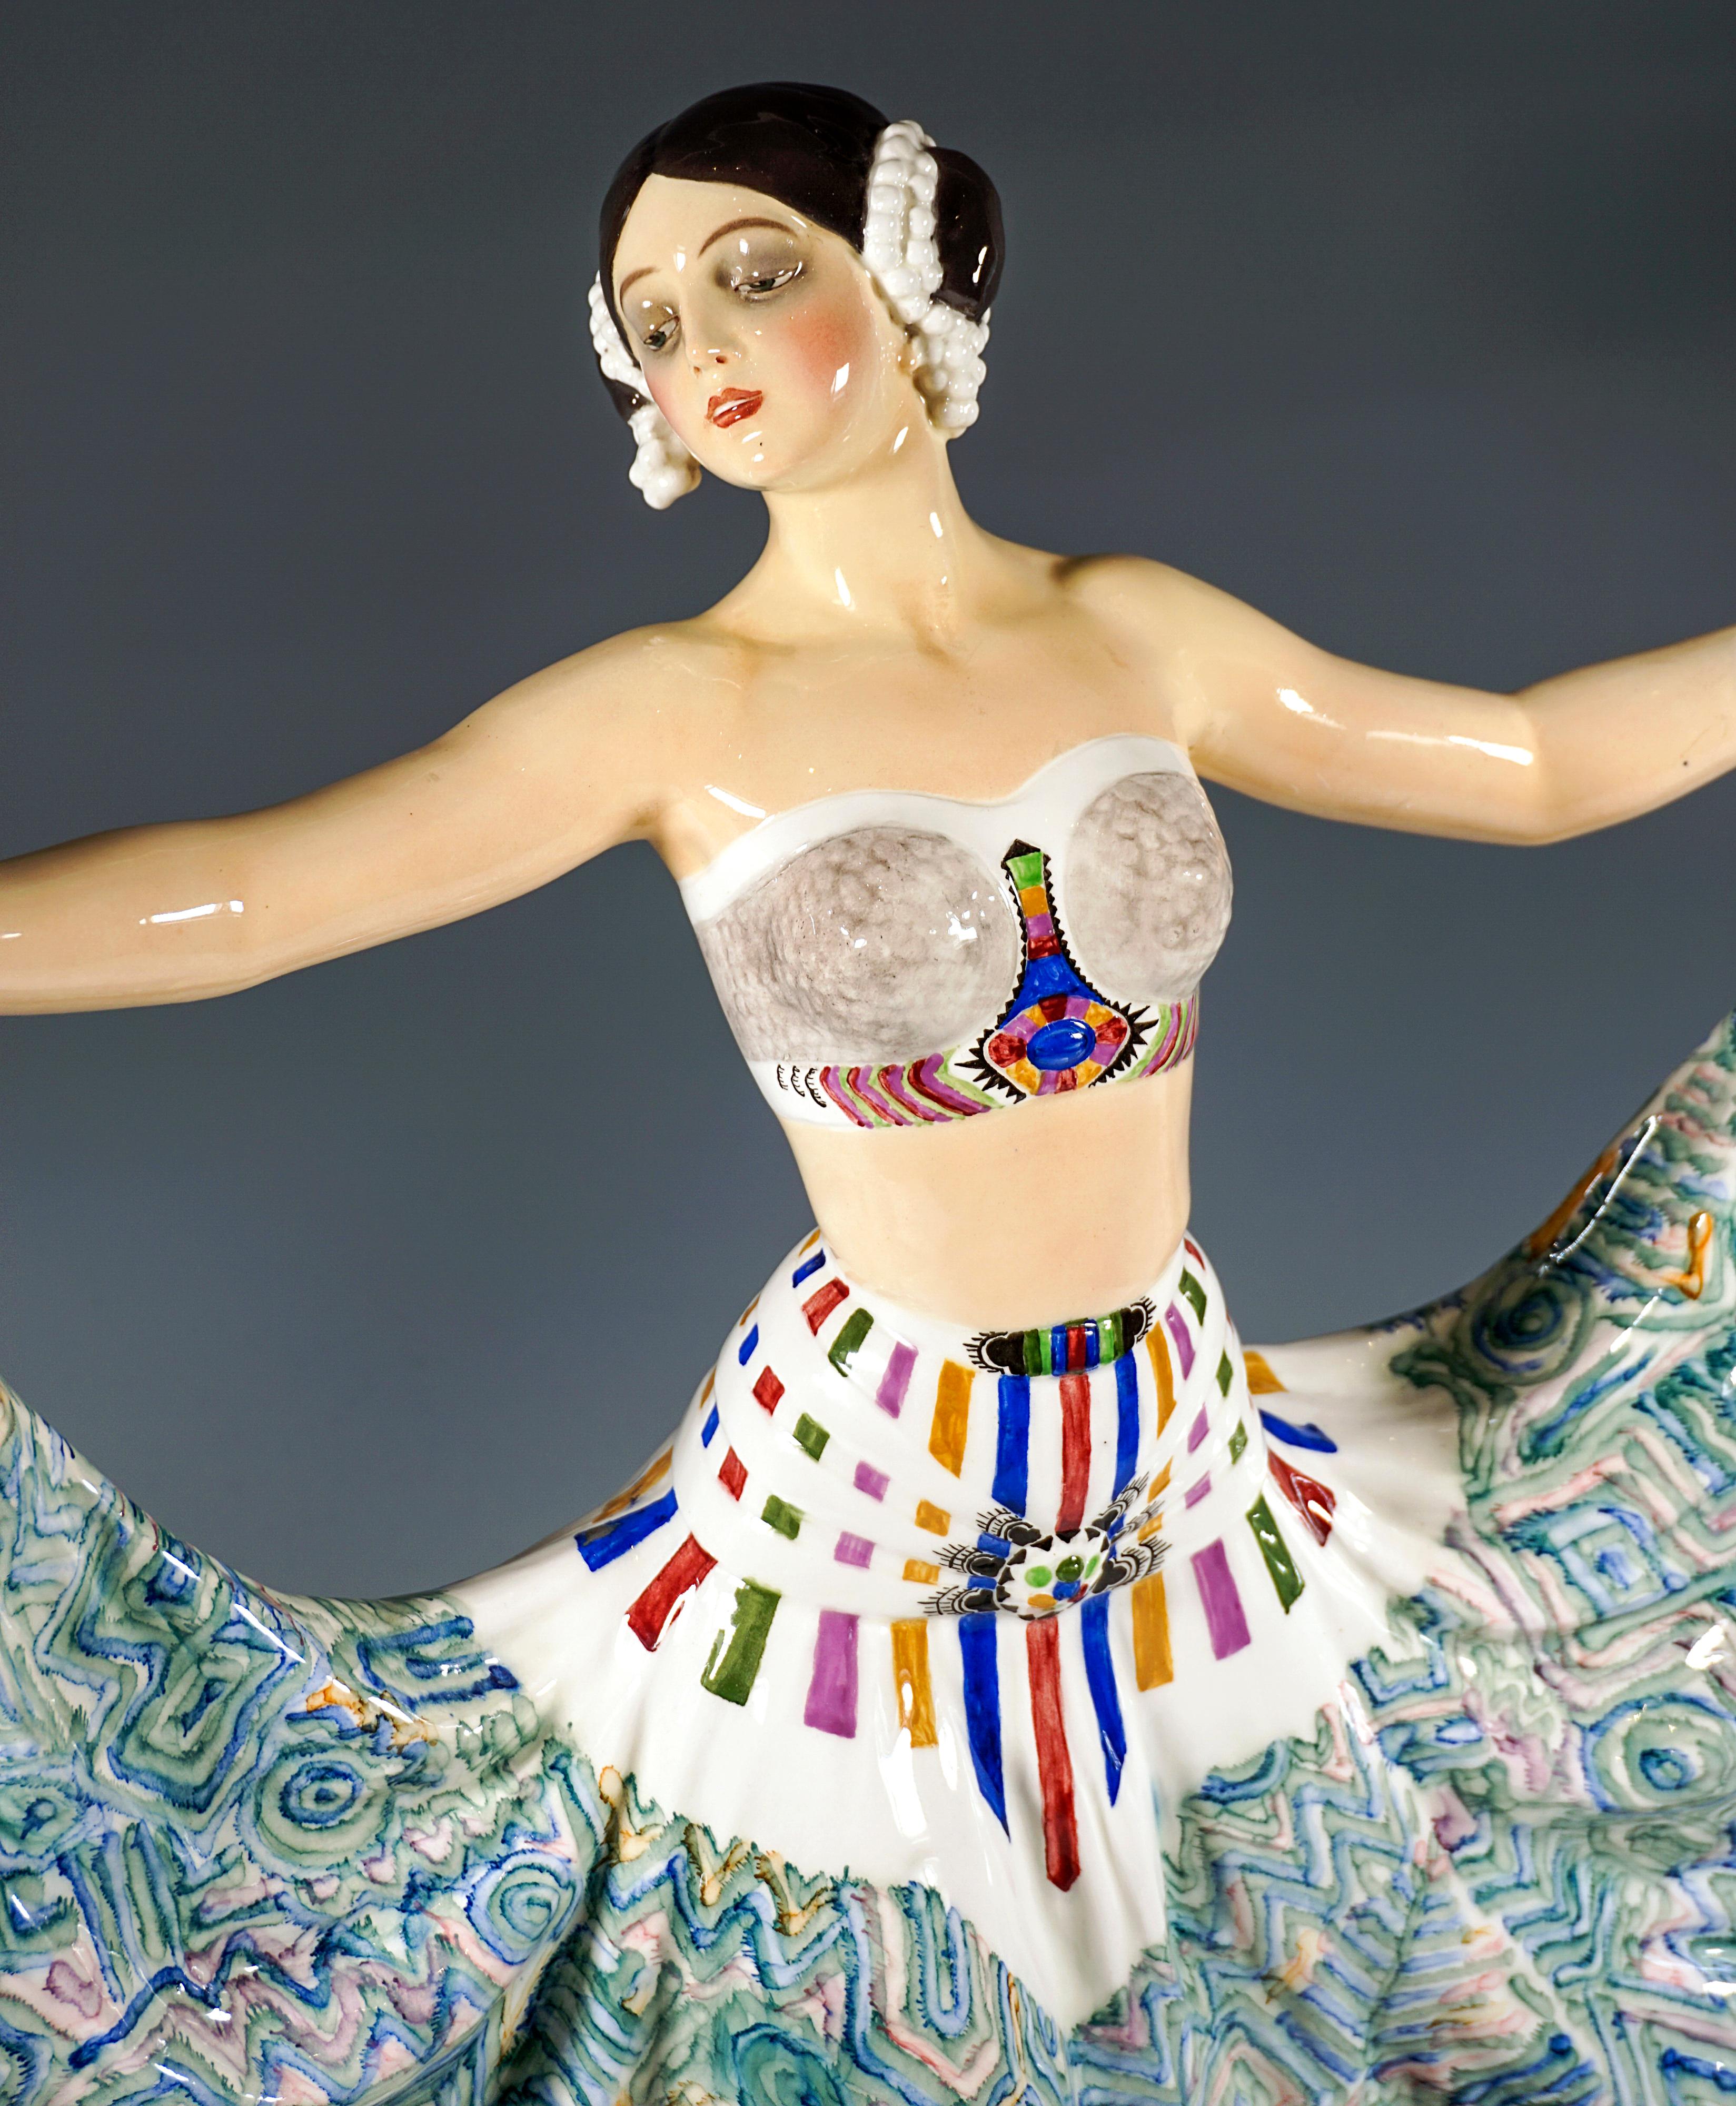 Early 20th Century Goldscheider Vienna Art Déco Figure, 'Ruth' Dancer in Oriental Costume, by Rosé For Sale